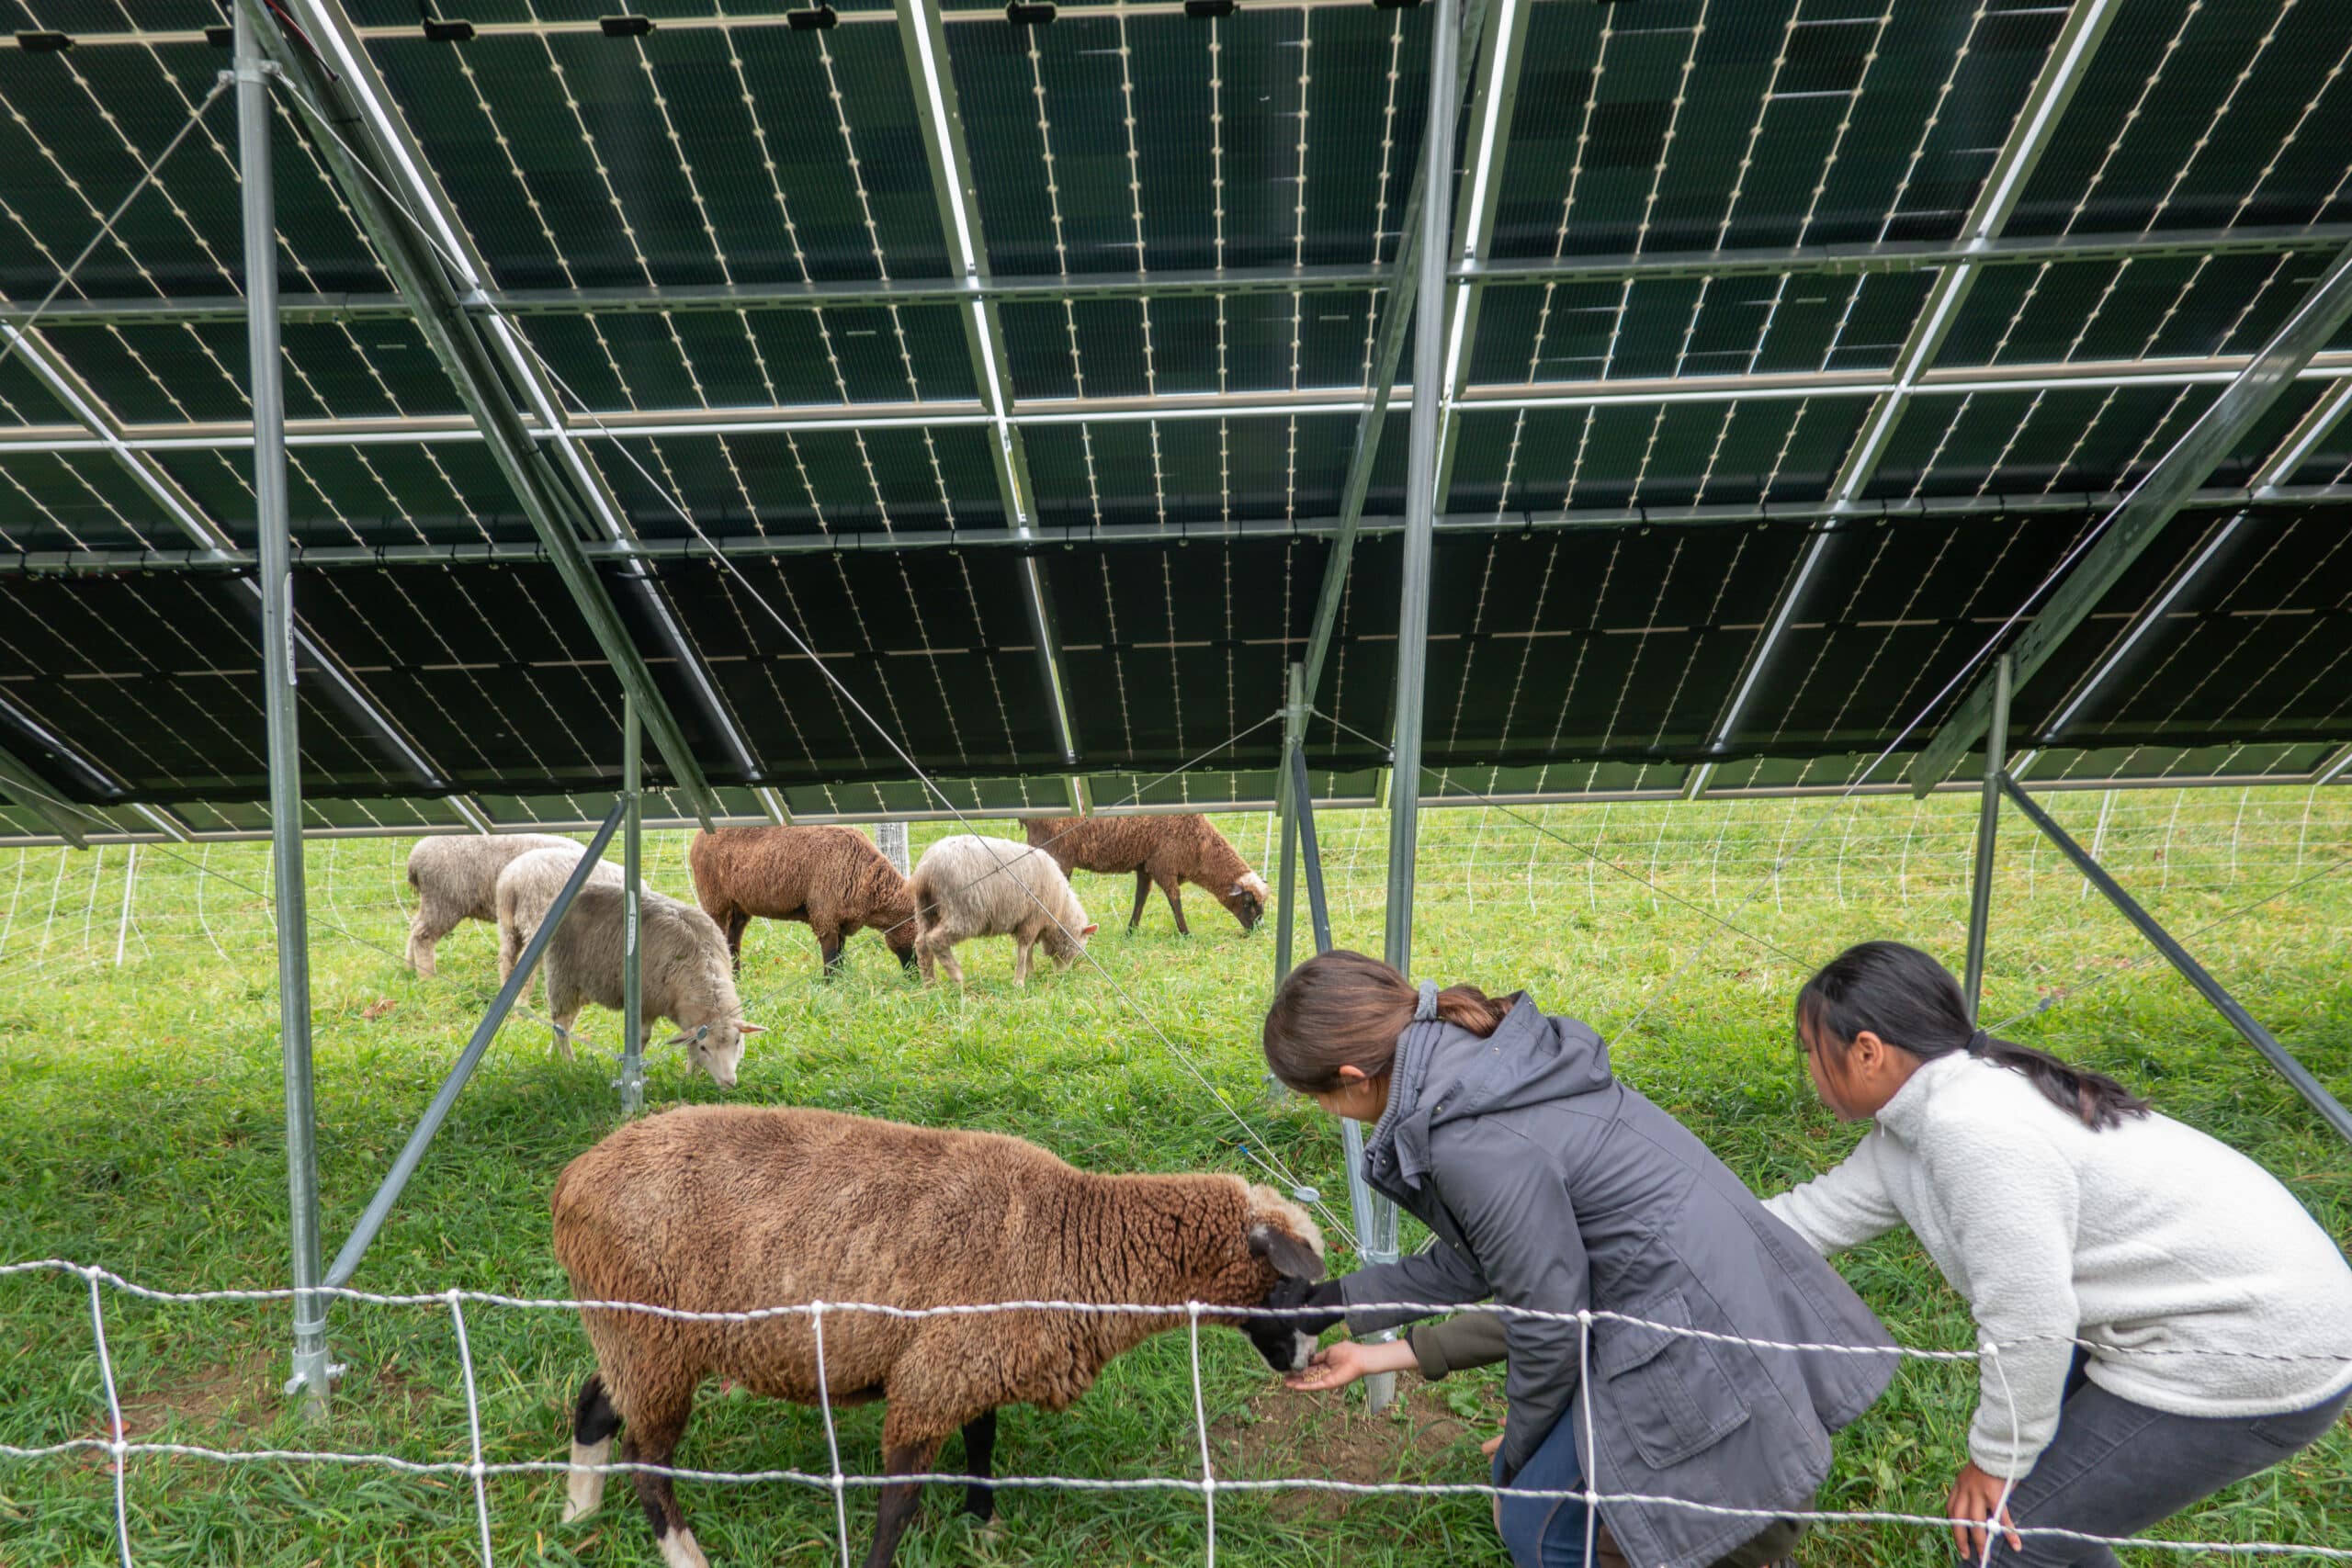 Campers feeding goats under Camp Glen Brook's solar panels